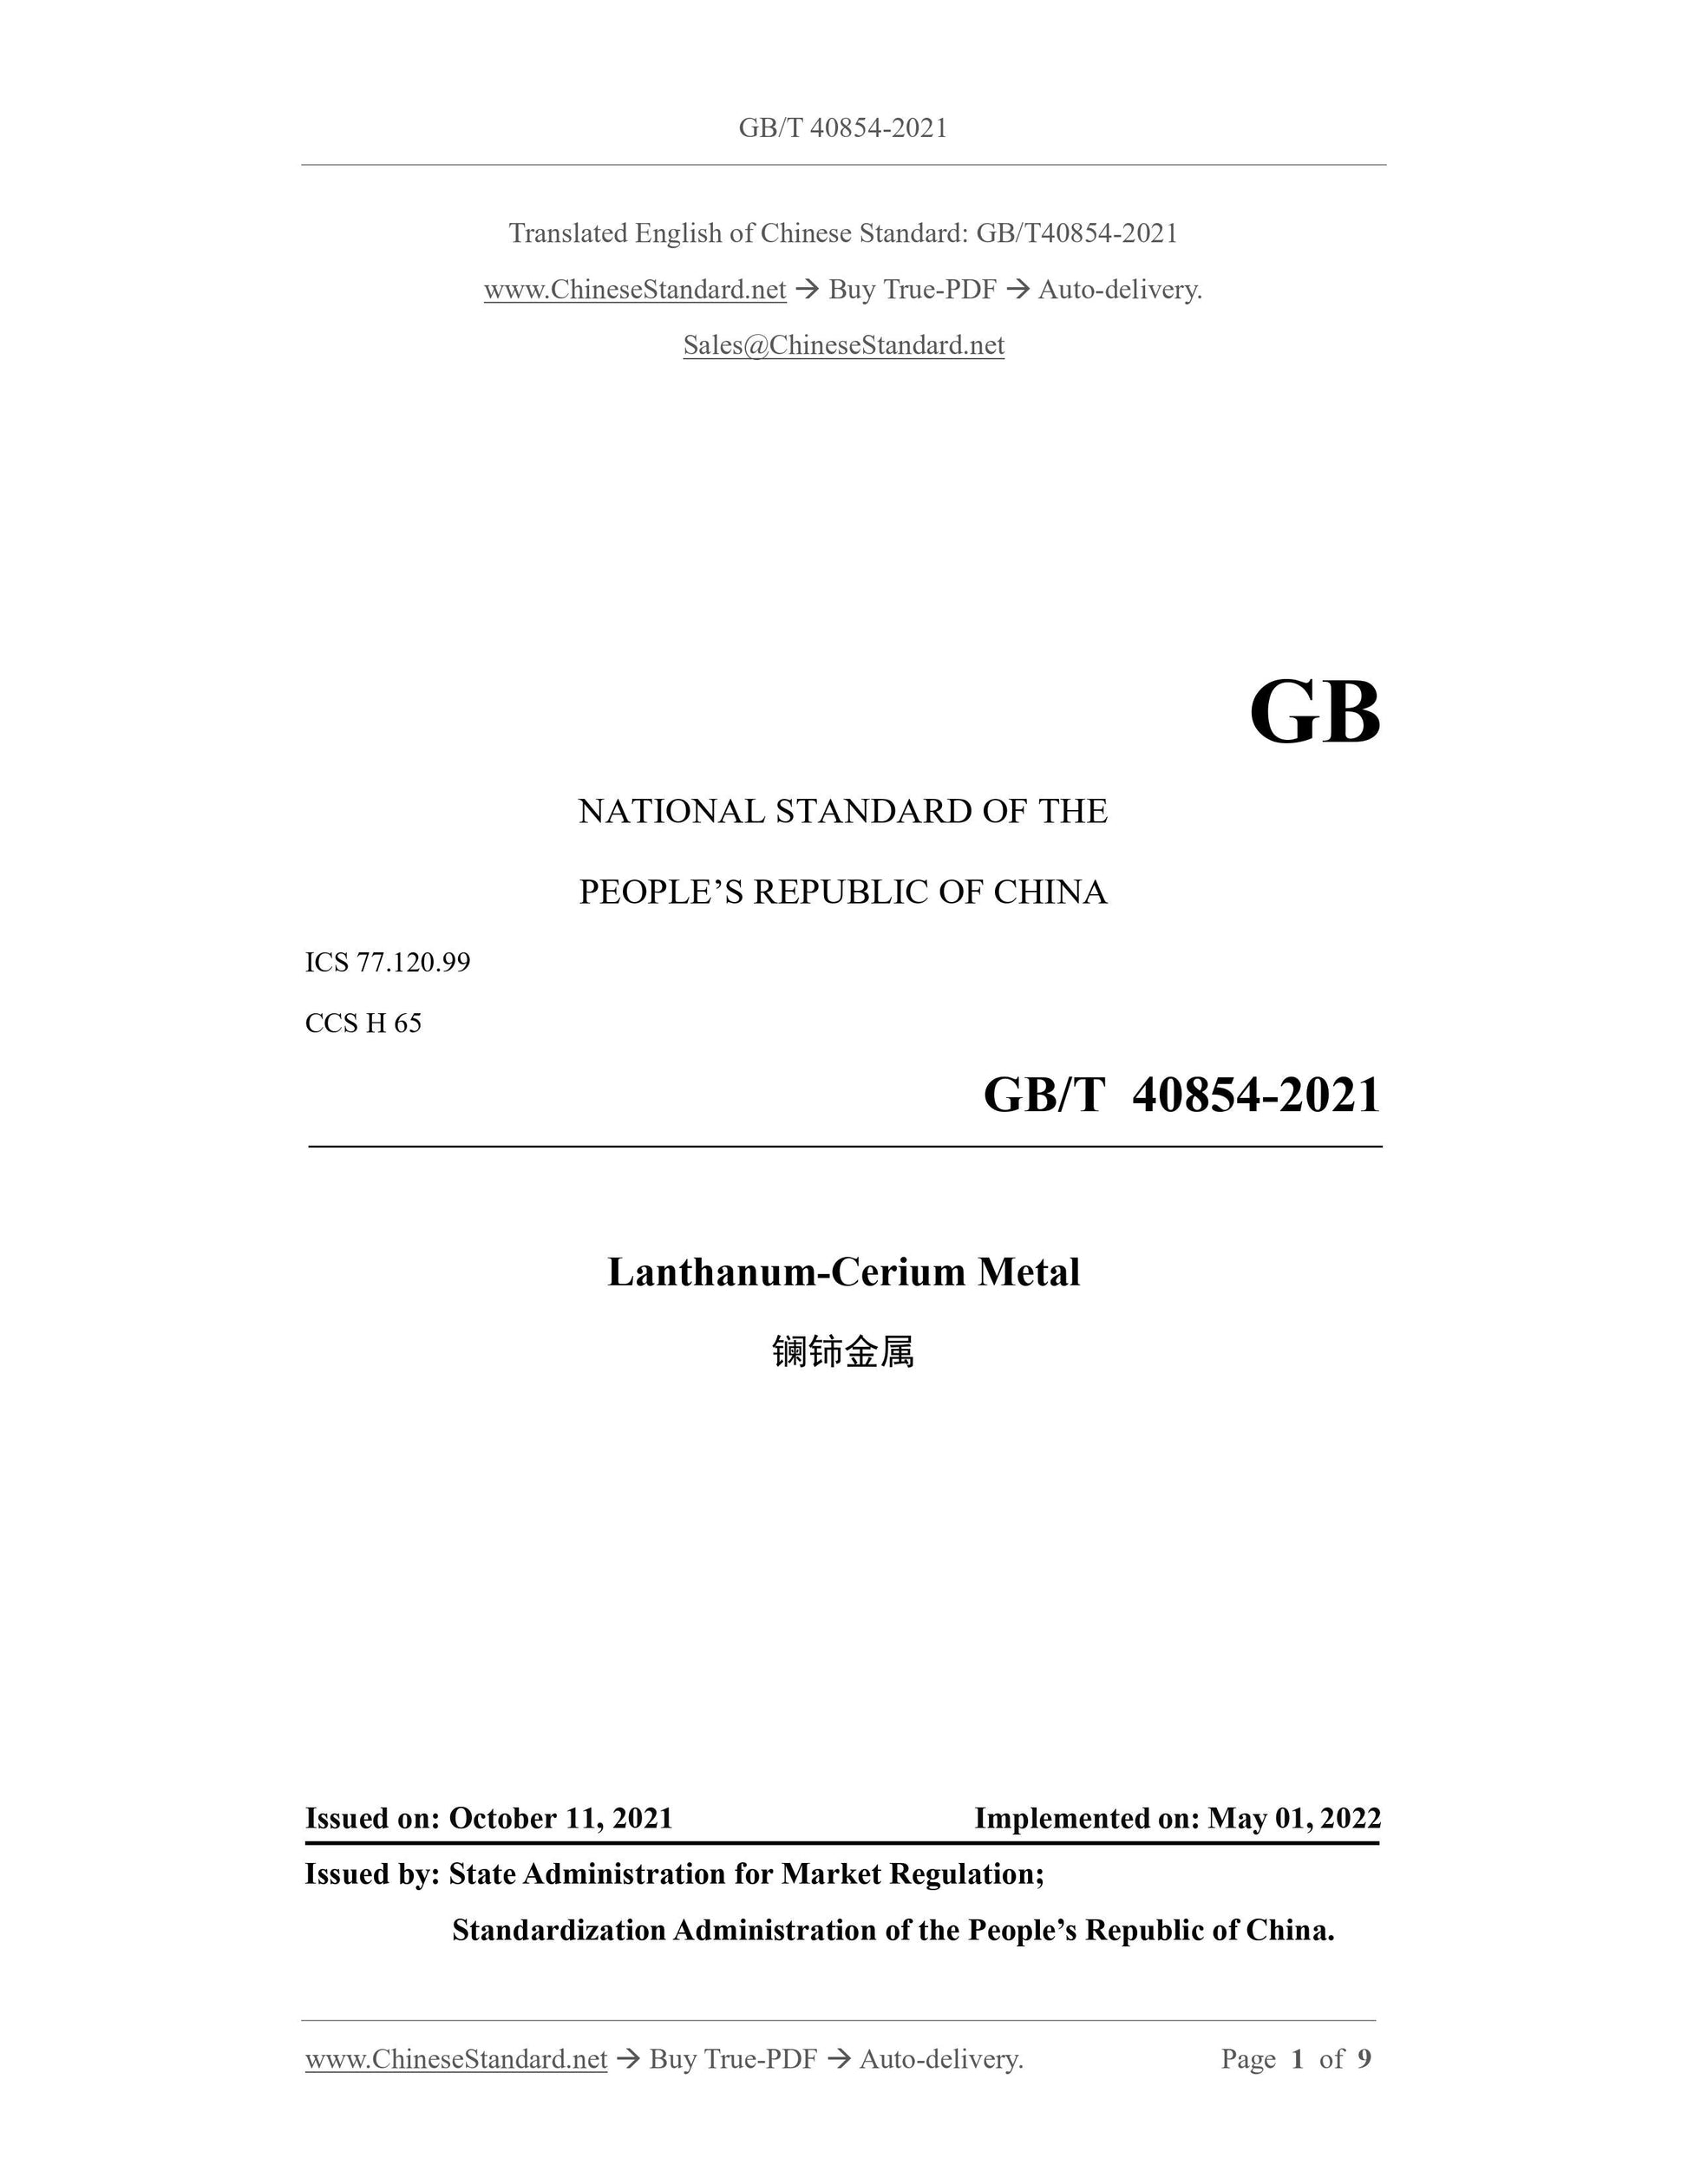 GBT40854-2021 Page 1